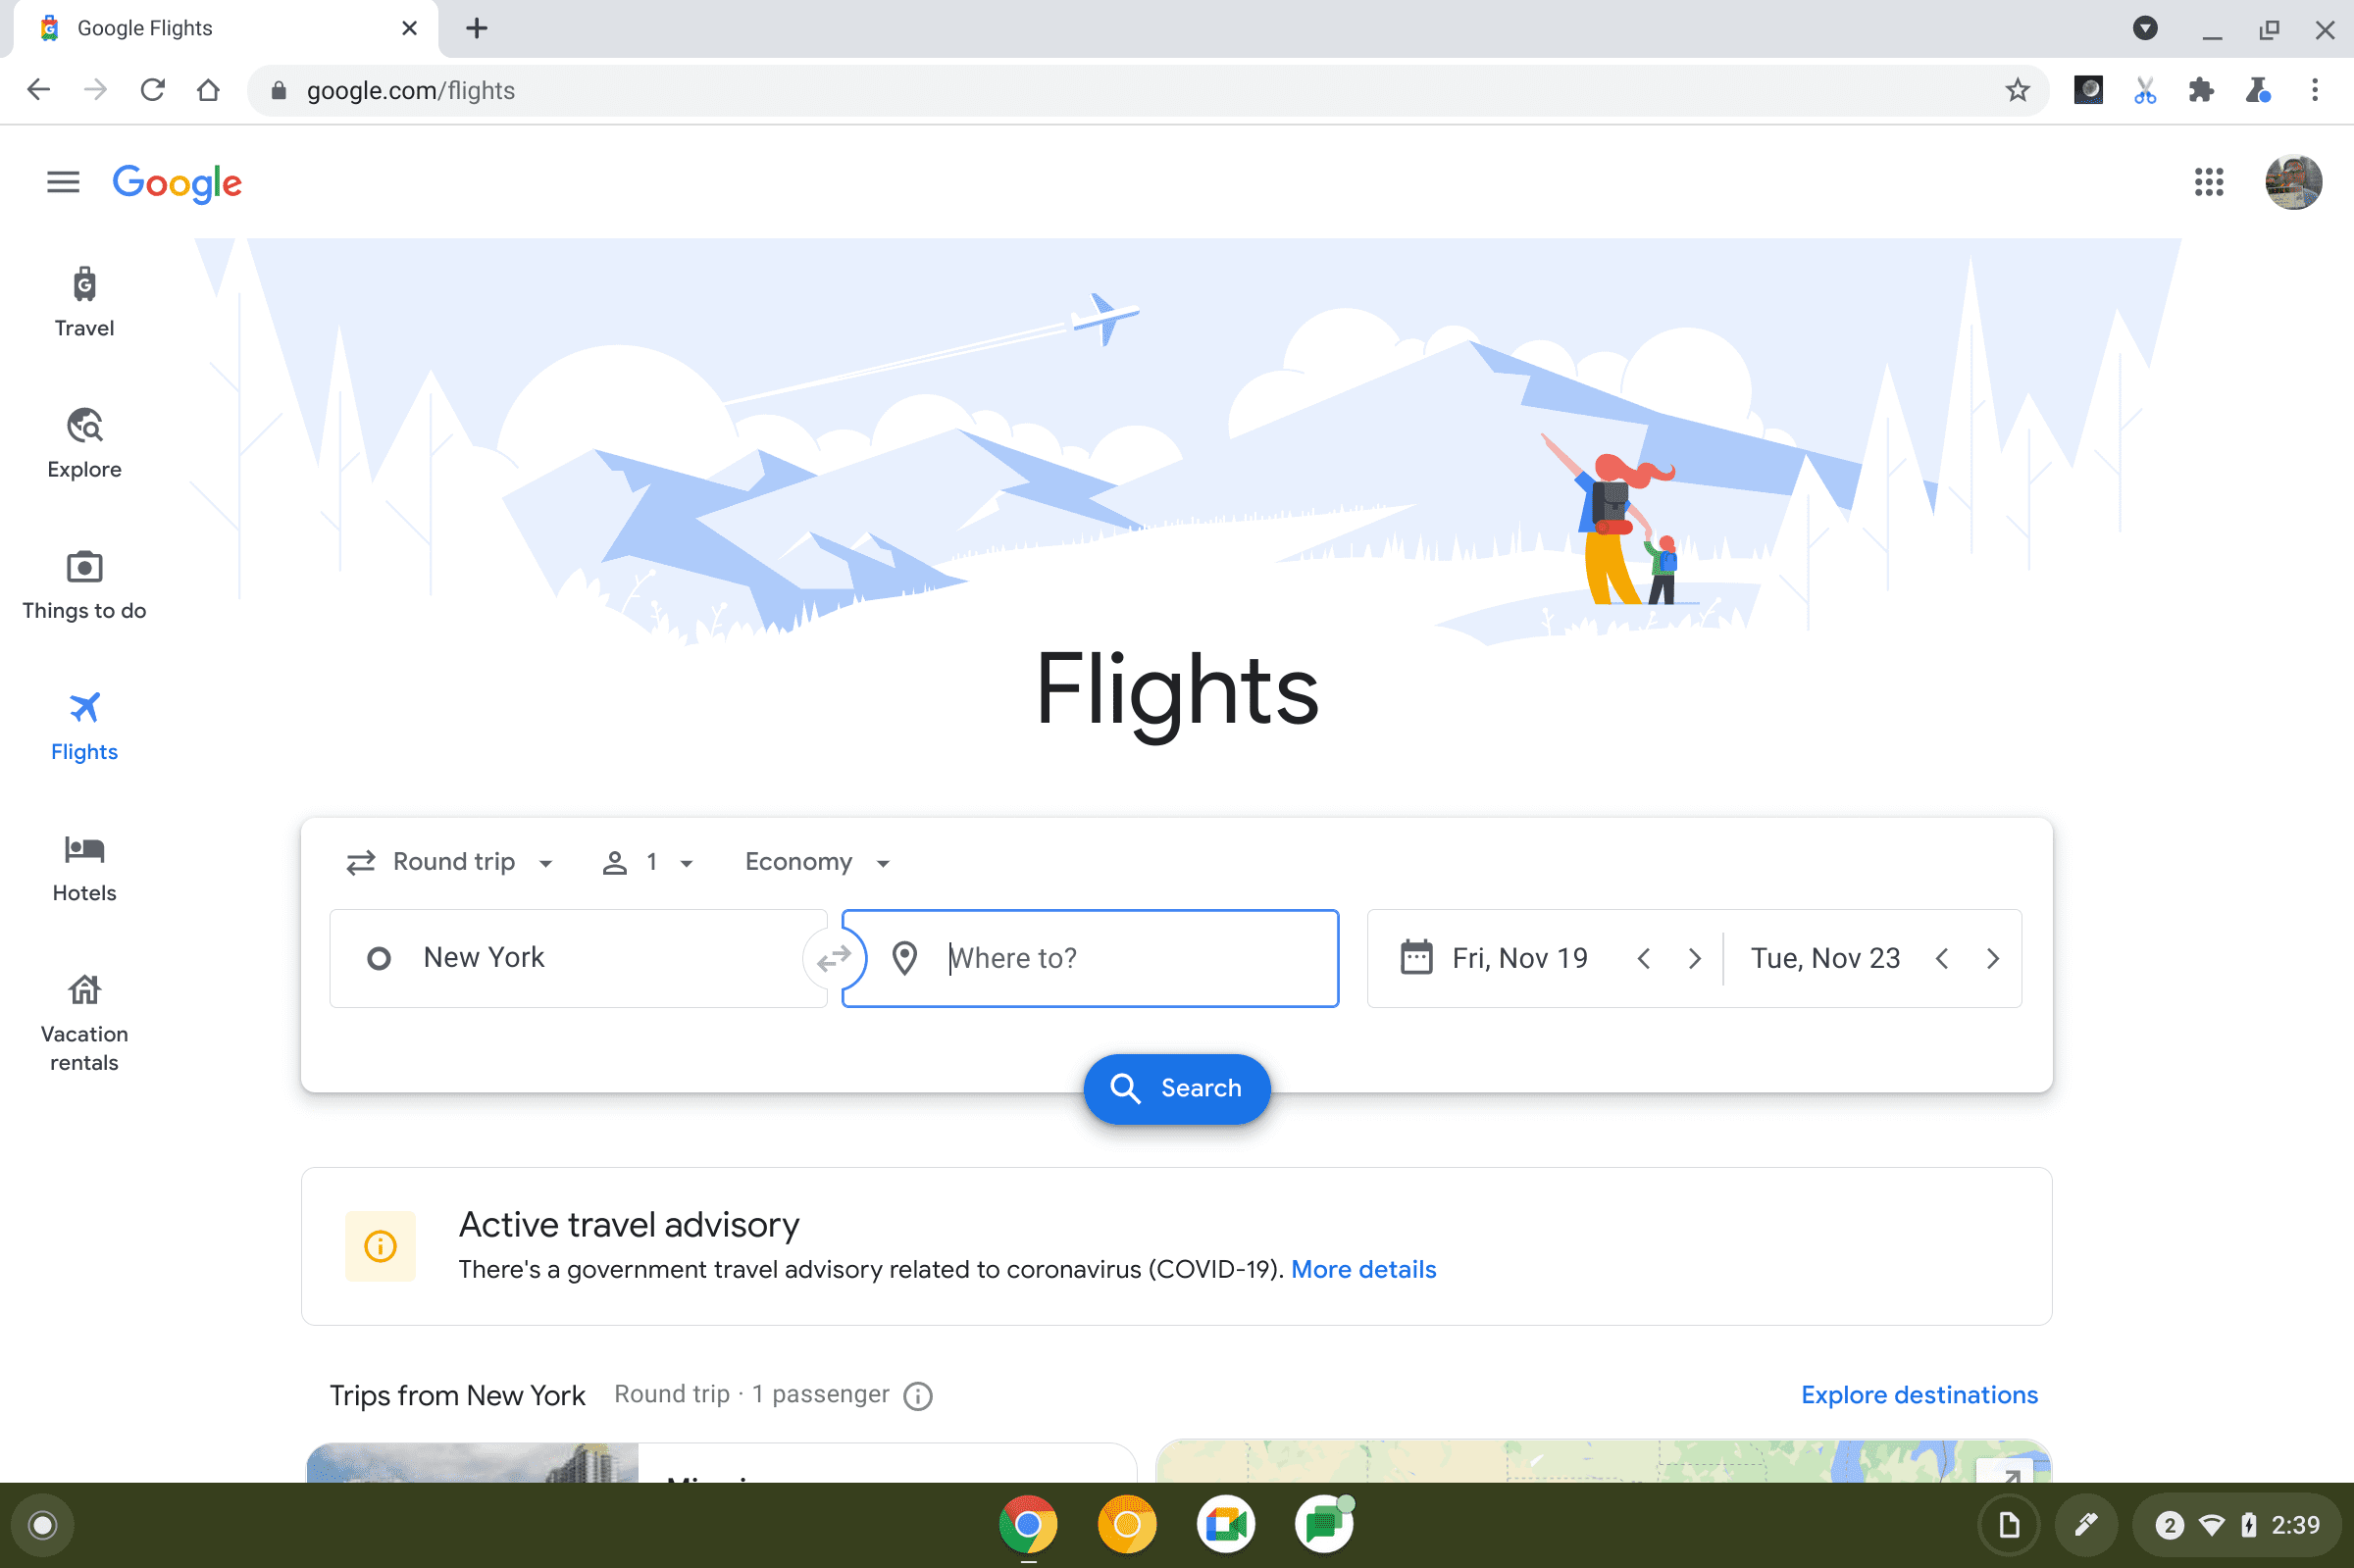 Screenshot of Google Flights with large background image